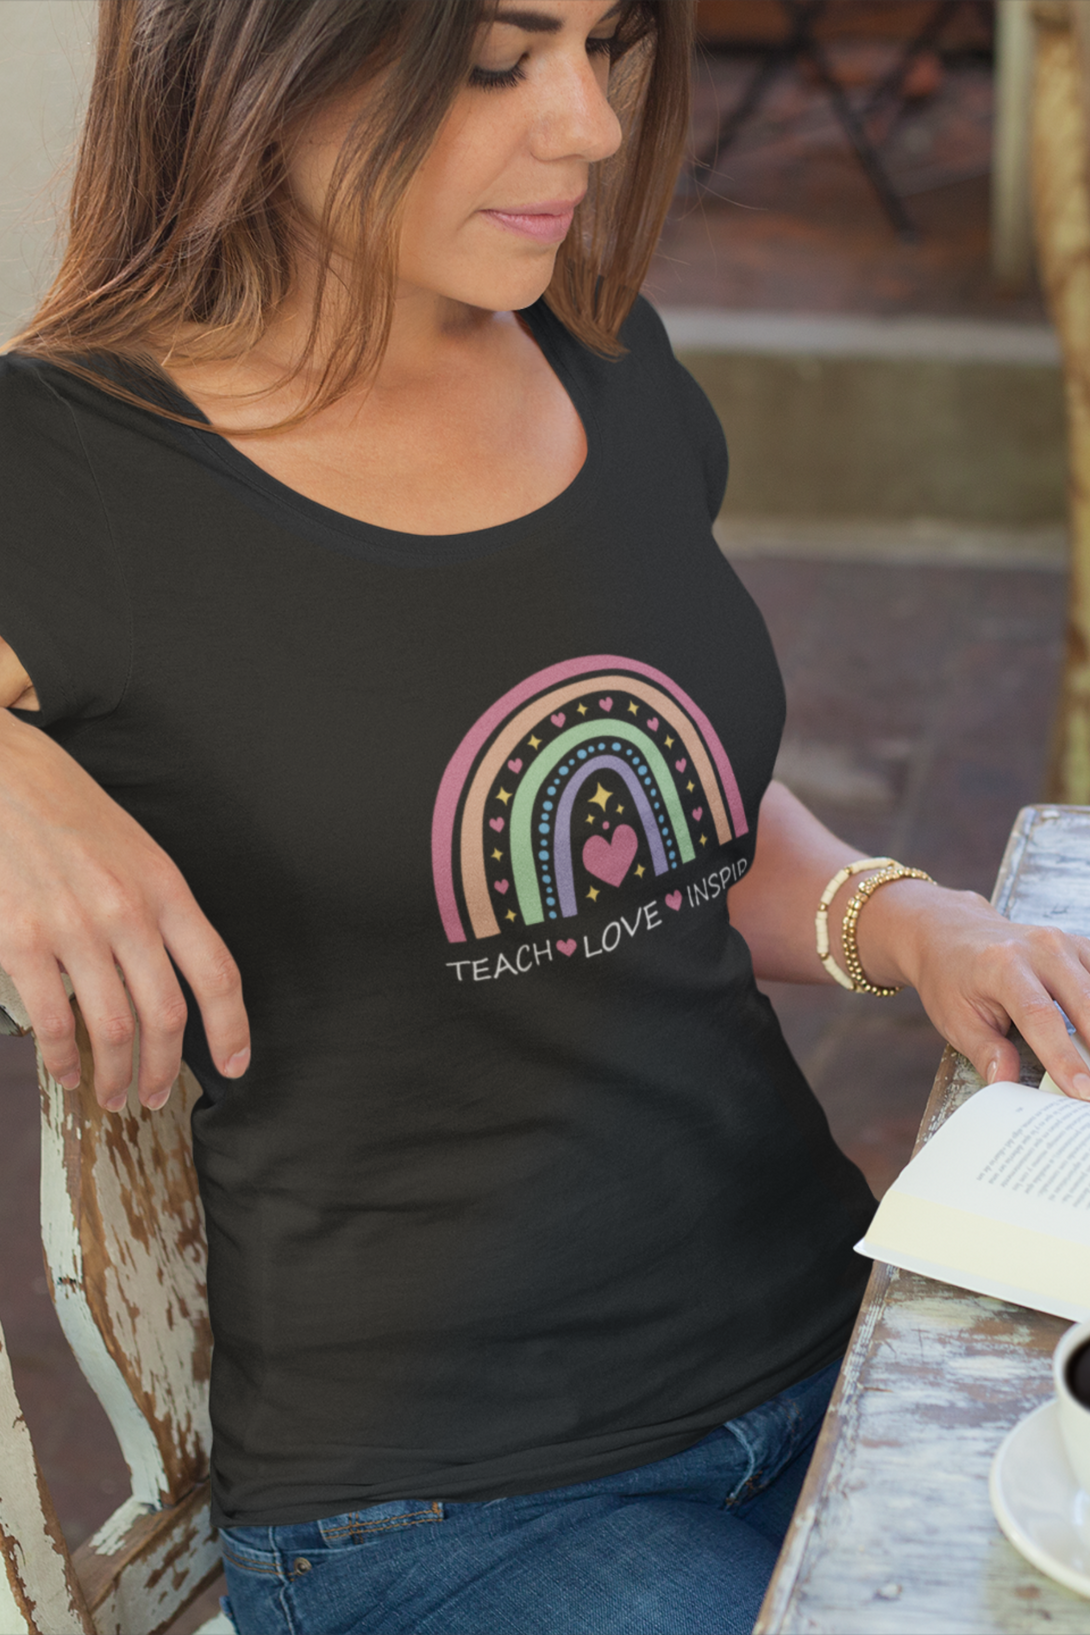 Teach, Love, Inspire Printed Scoop Neck T-Shirt For Women - WowWaves - 2